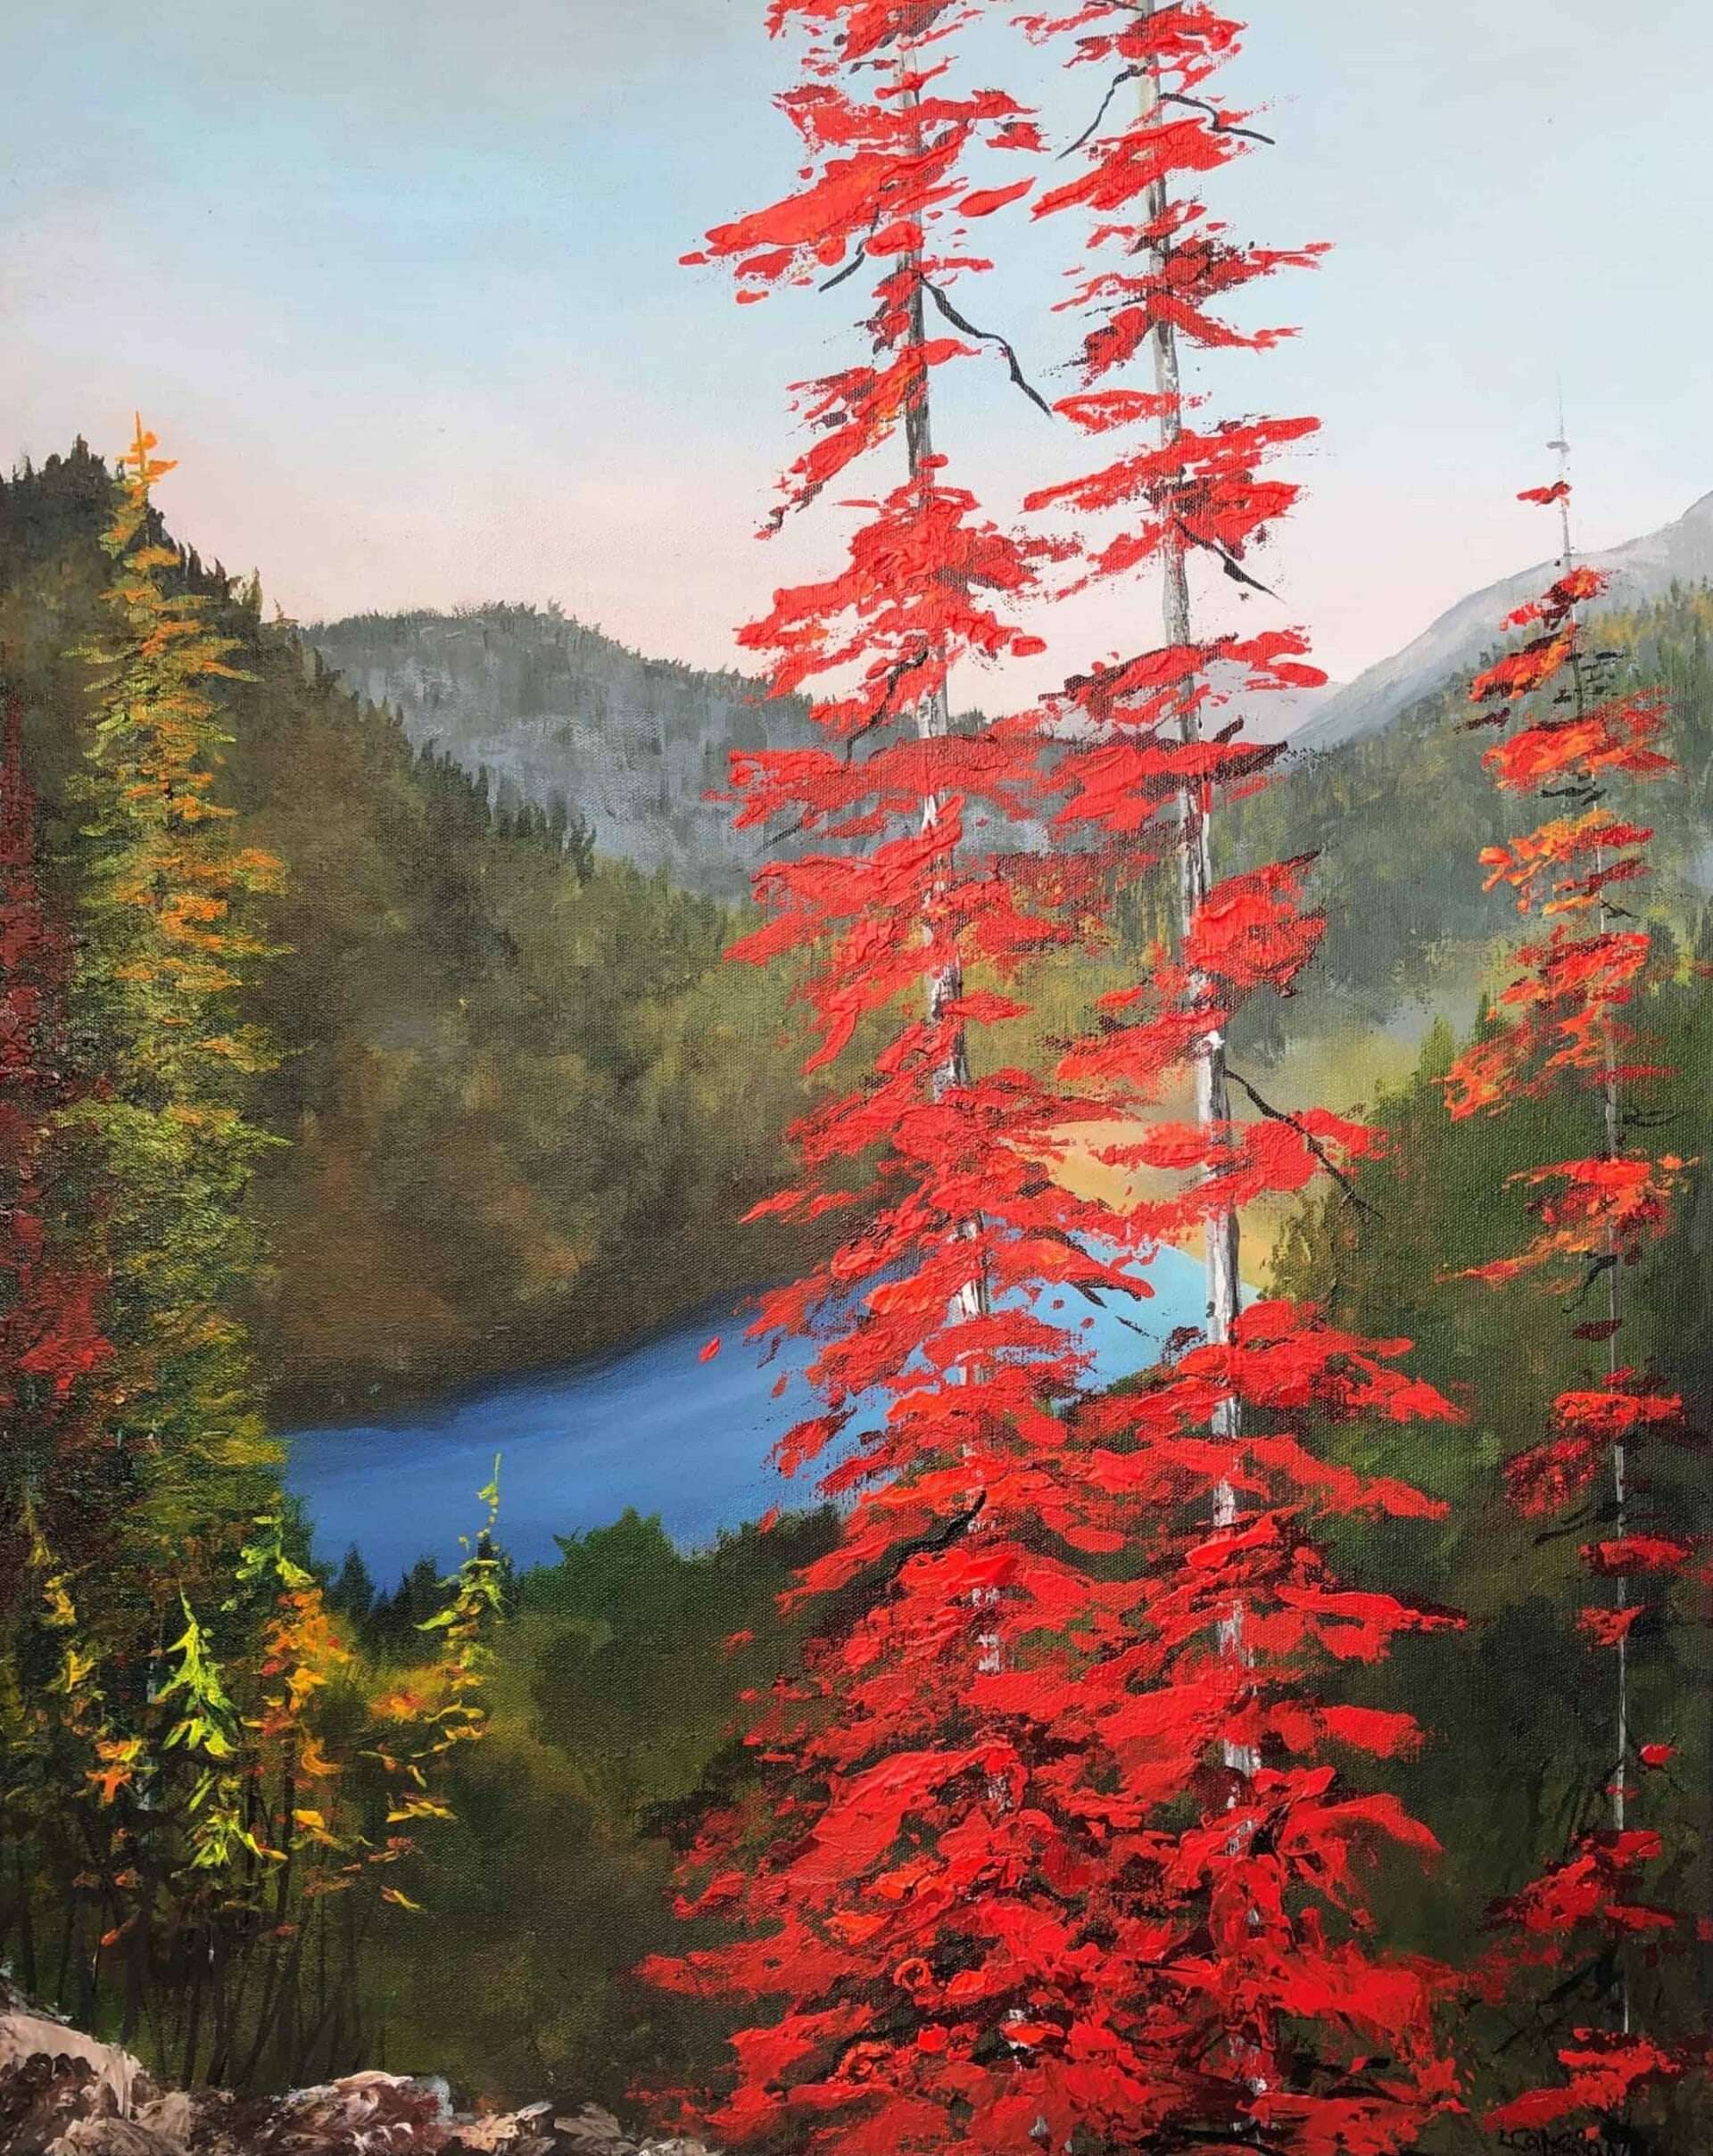 Sky High Aspens - Canadian Original Artwork For Sale by Lynn Cameron - Calgary, AB Local Artist - Mountains